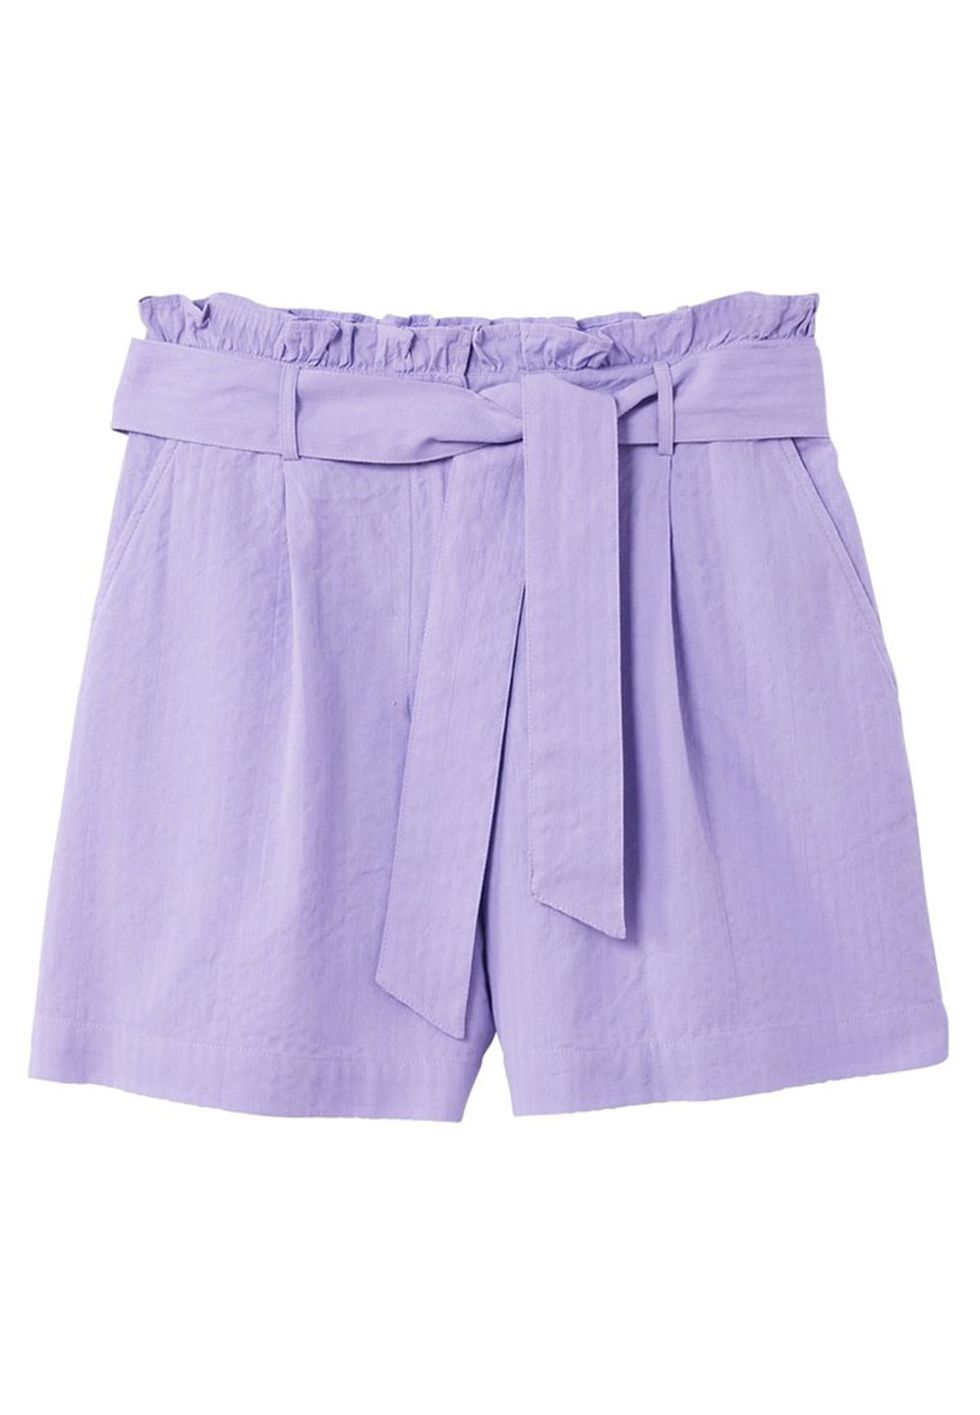 Clothing, Shorts, Active shorts, Purple, Bermuda shorts, Violet, Trunks, Pocket, Sportswear, 